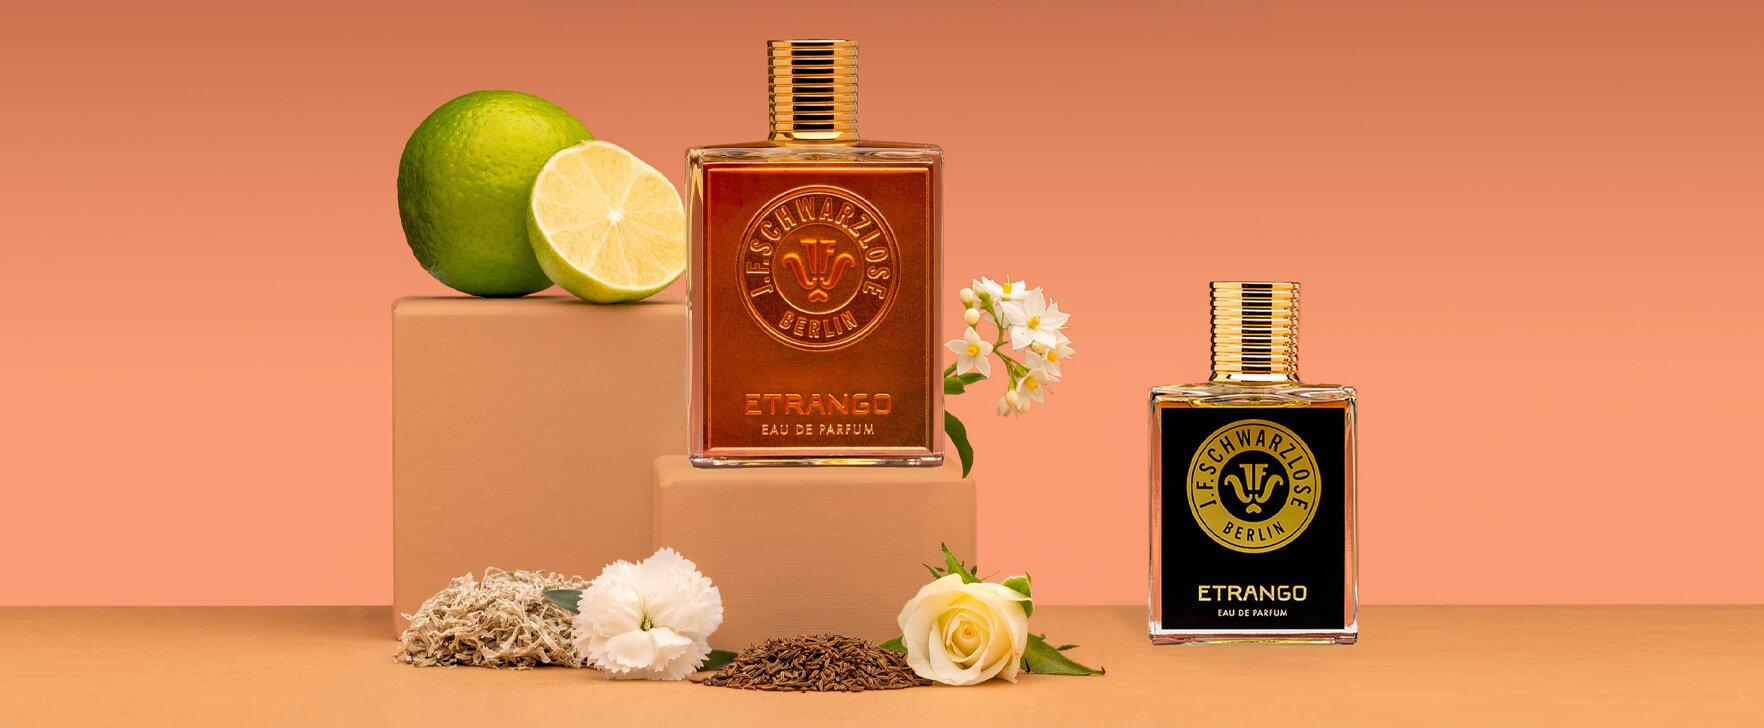 Opulent, Sensual and Sexy: The New Unisex Fragrance Etrango by J.F. Schwarzlose Berlin